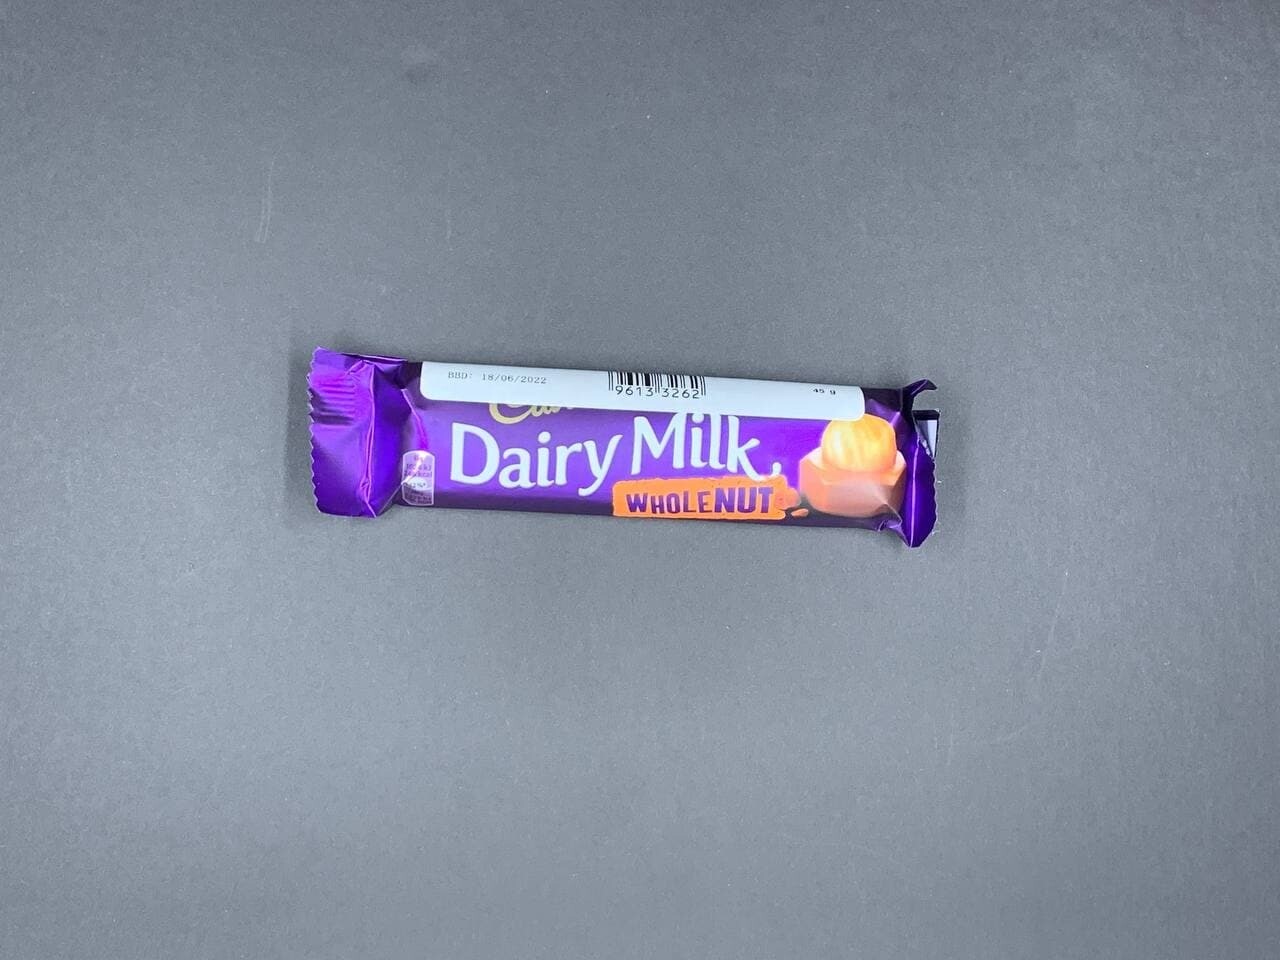 Cadbury Dairy Milk Wholenut 45g